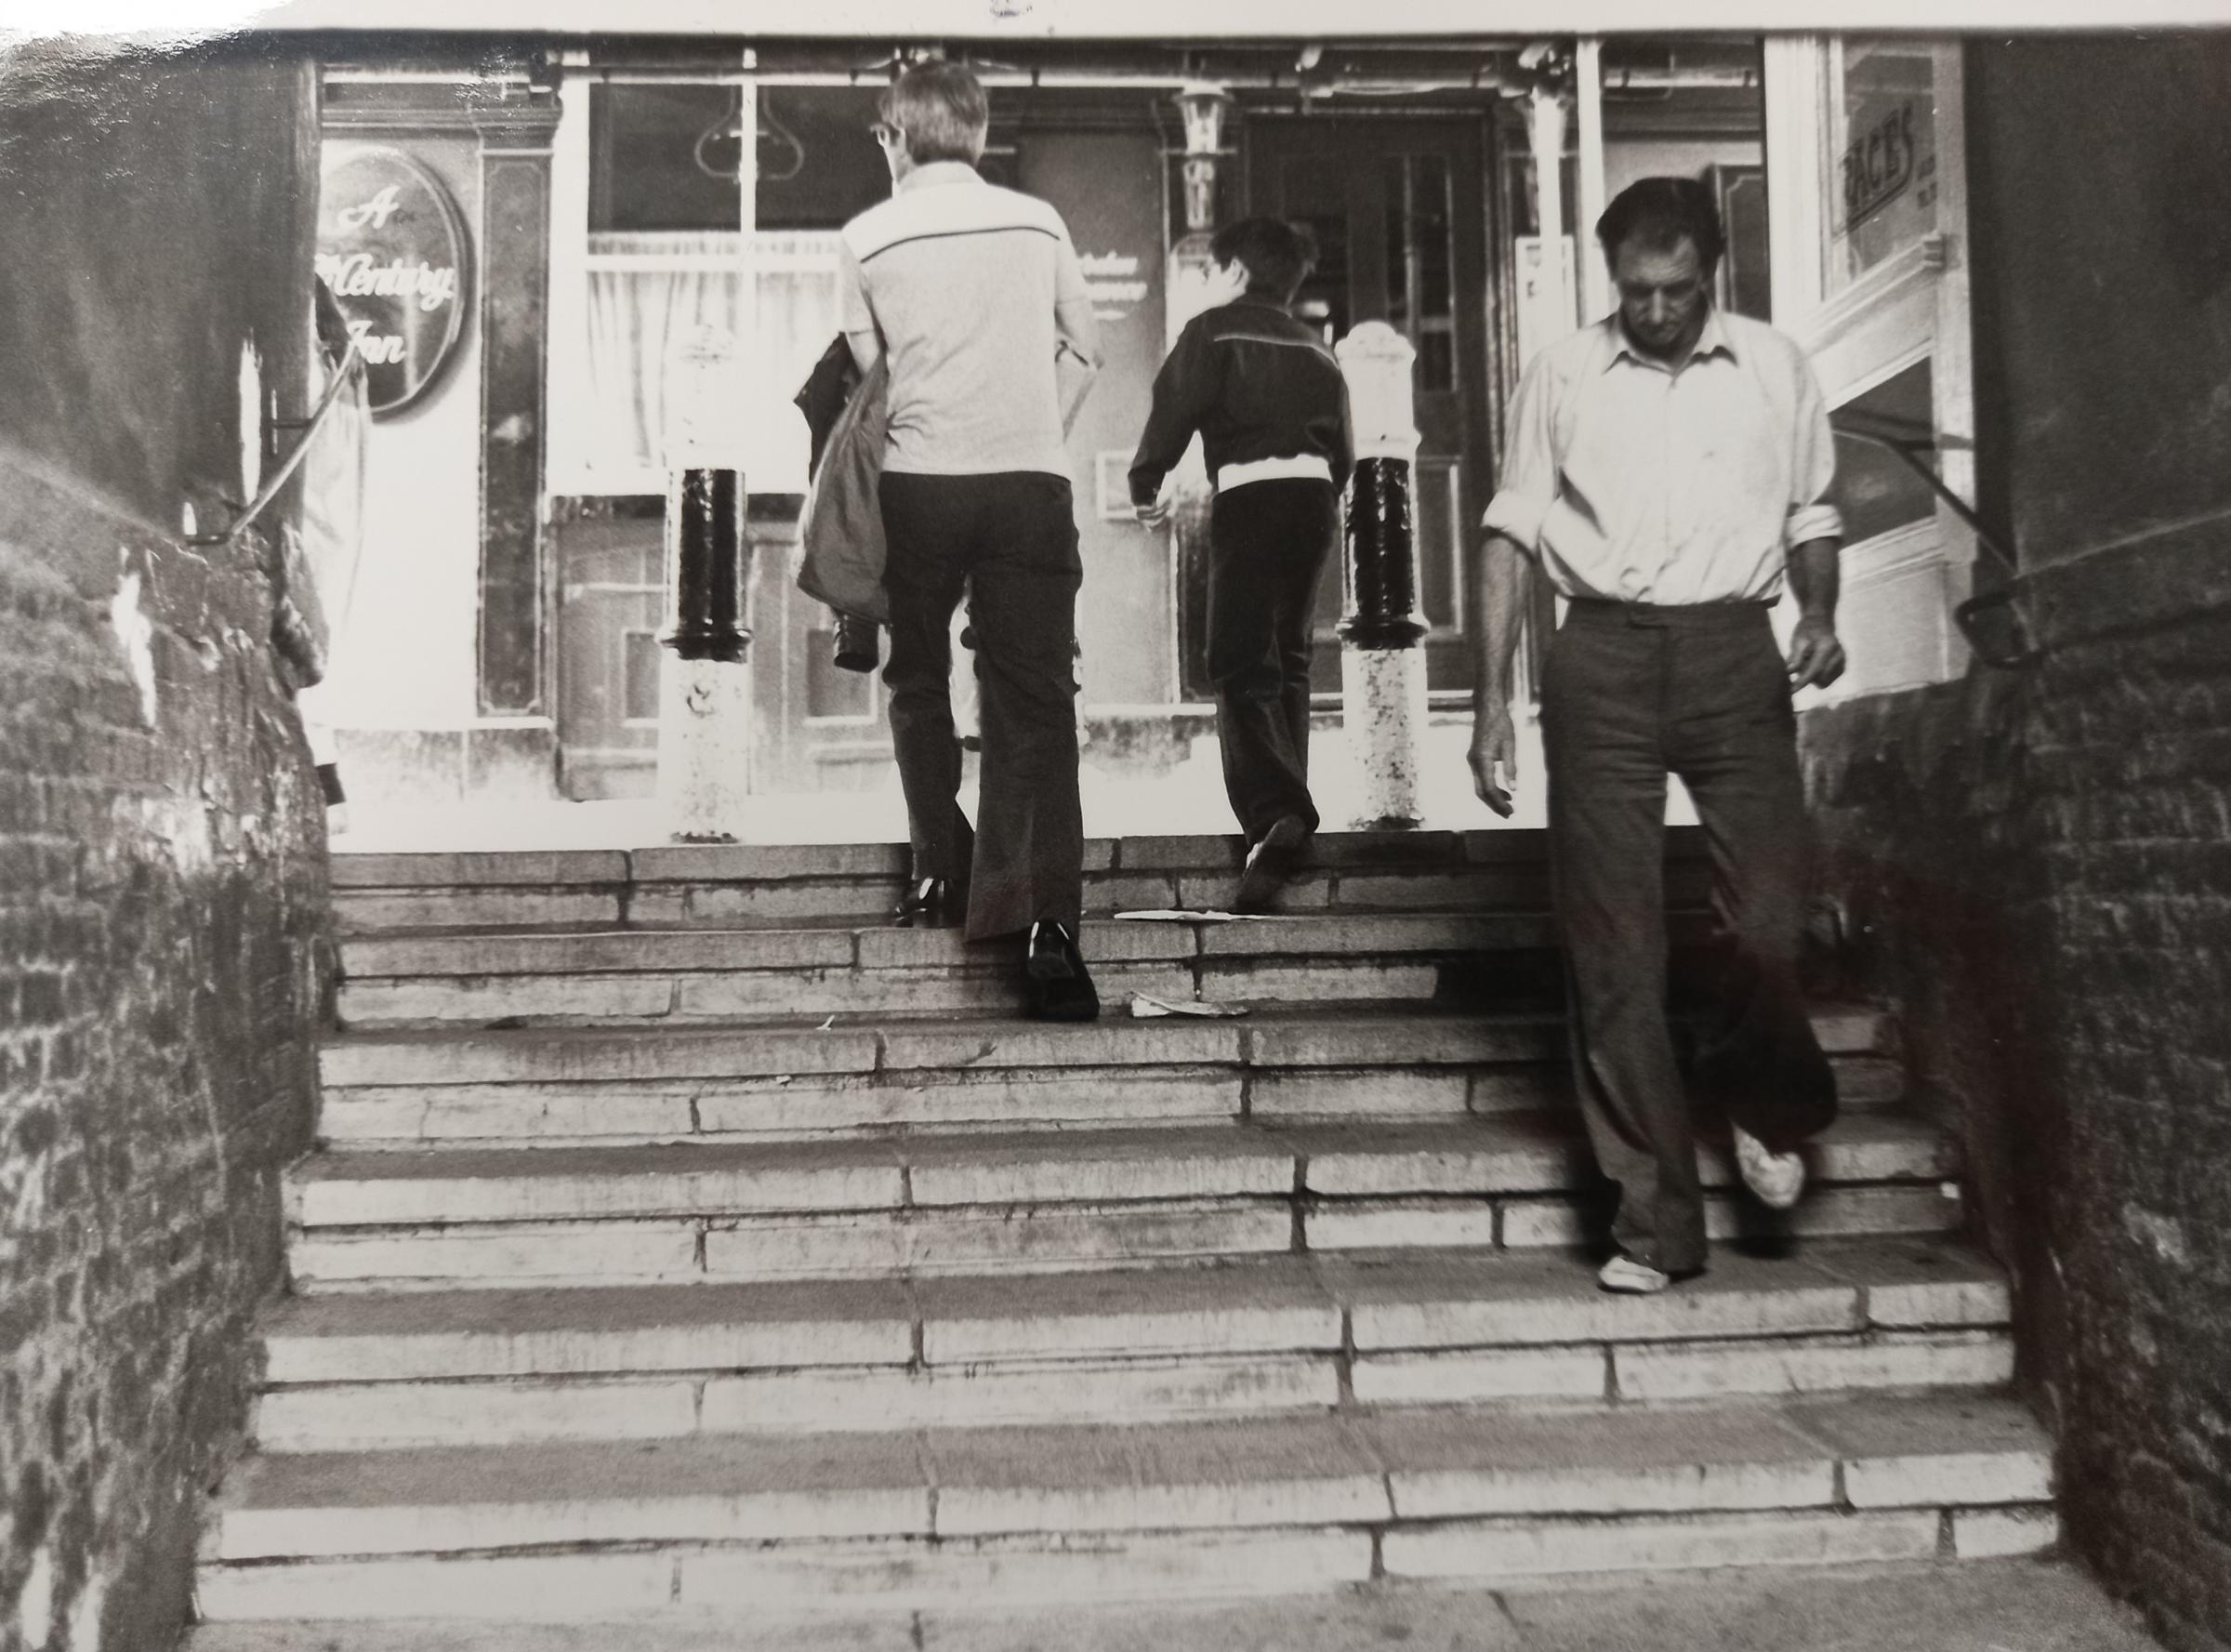 Scheregate steps pictured in 1979